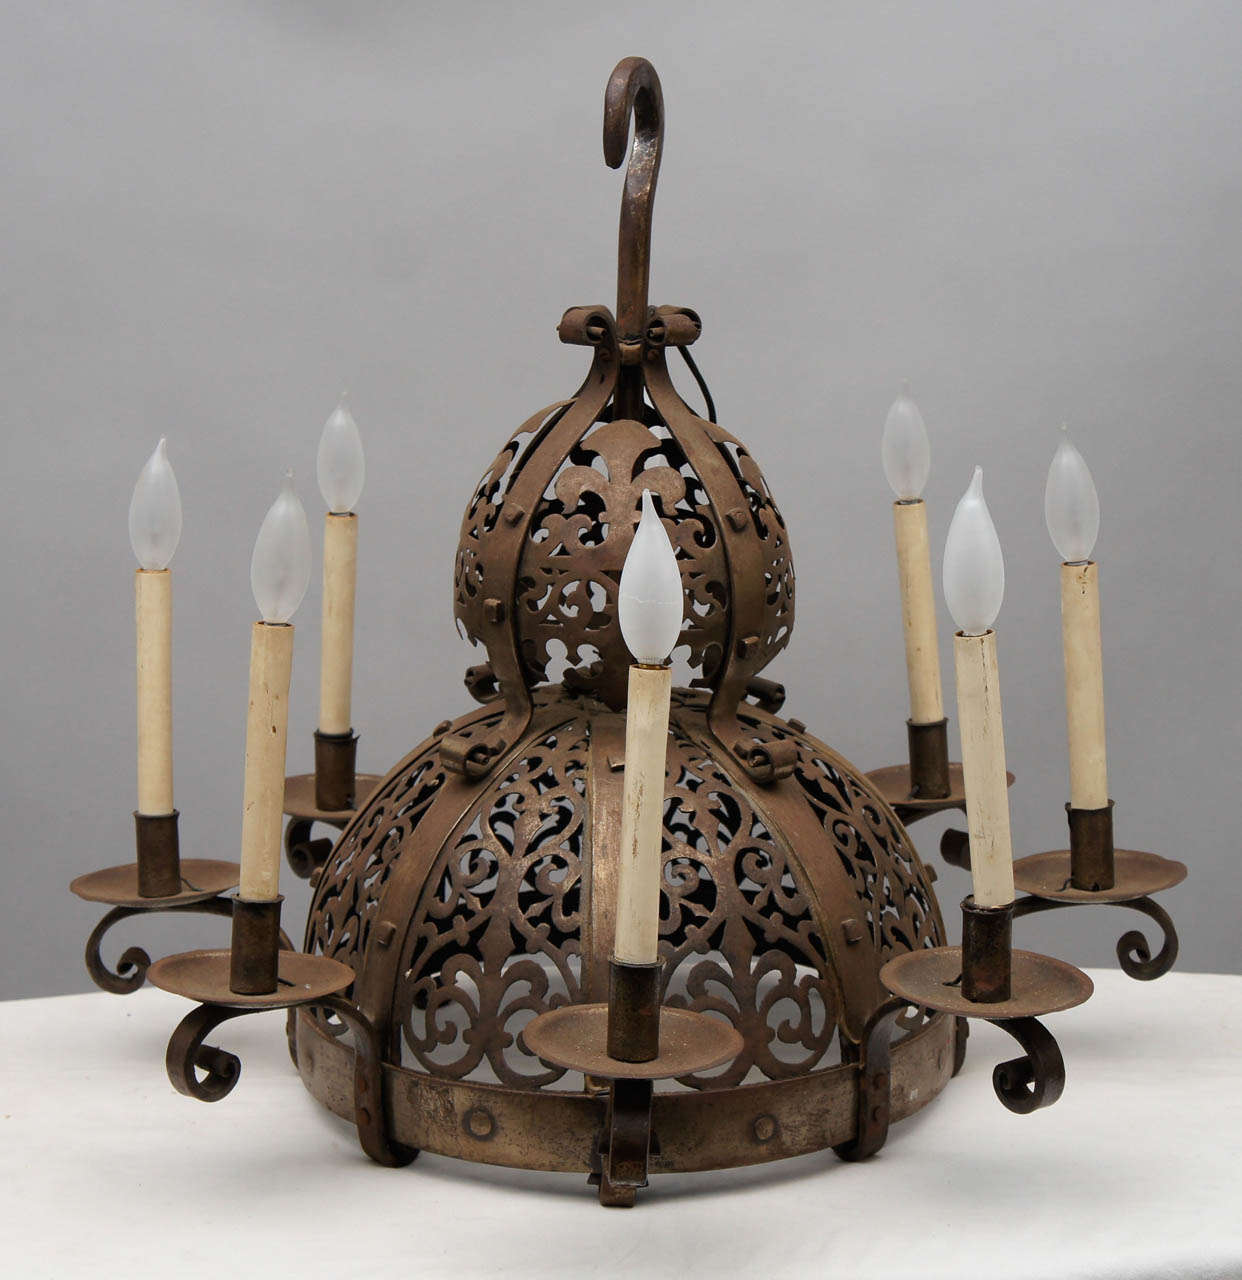 Moorish style metal light fixture with ornate calligraphic design.